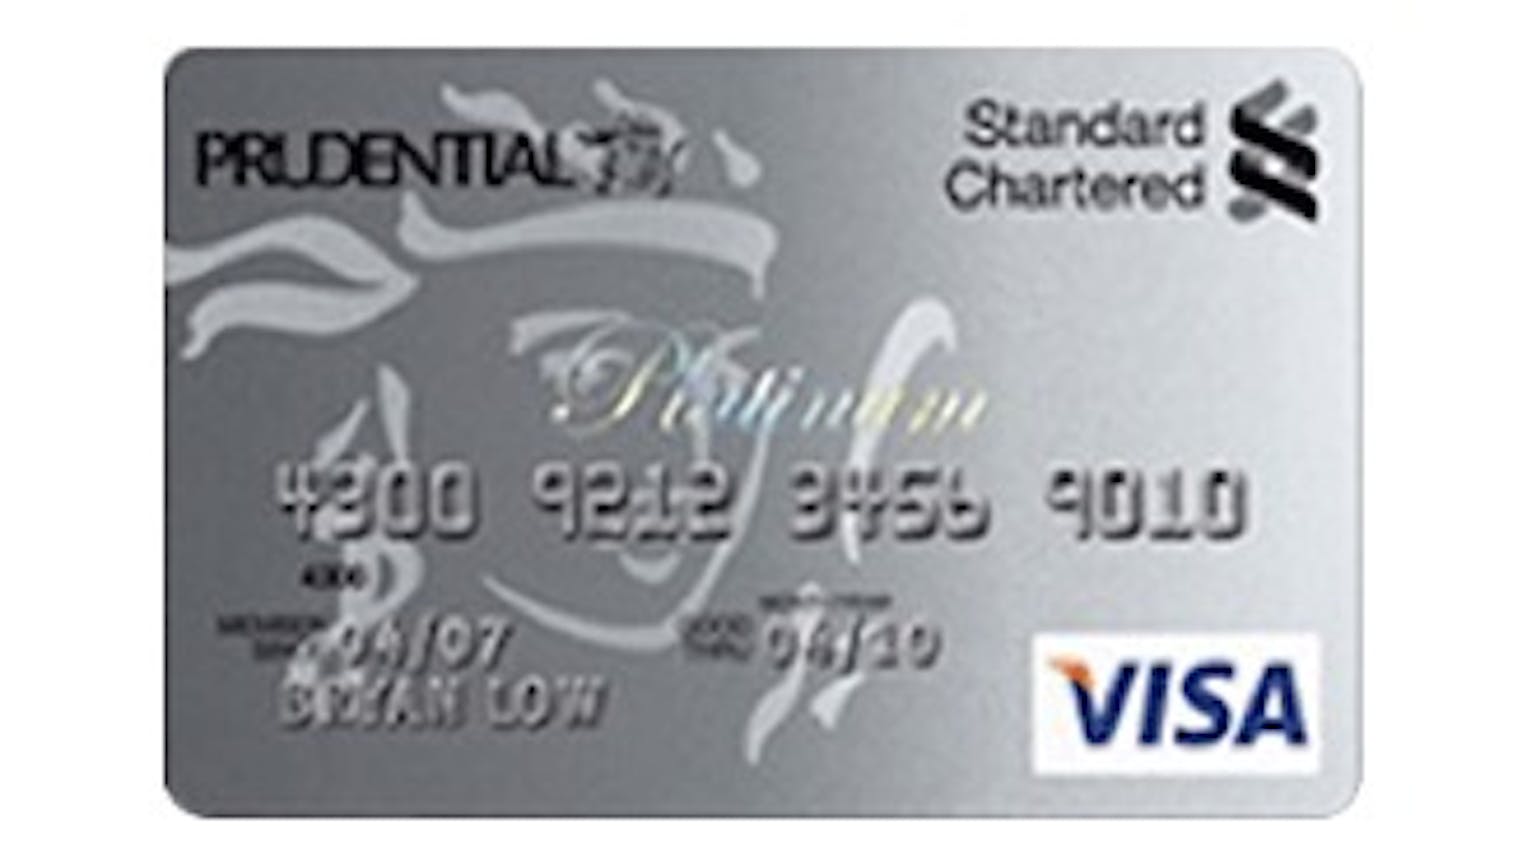 Standard Chartered Prudential Platinum Card